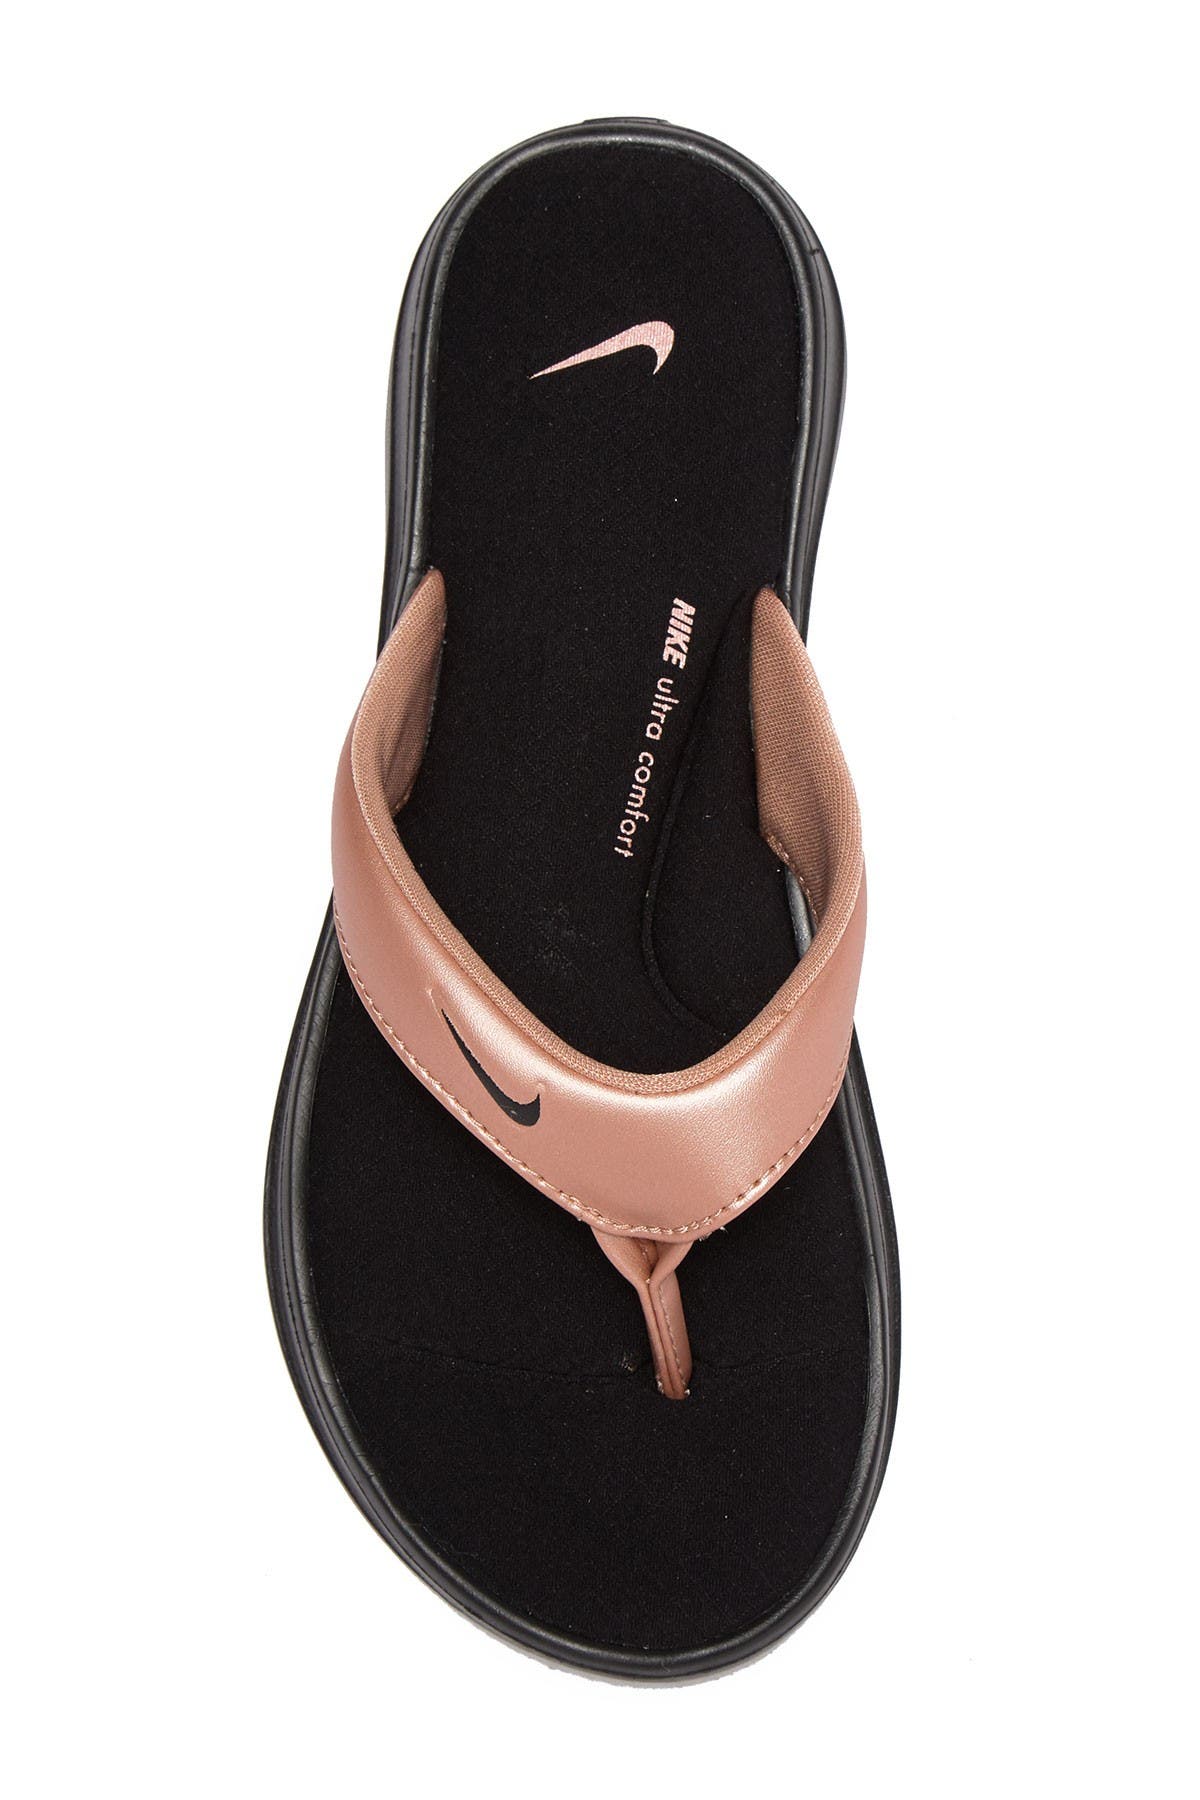 women's nike ultra comfort flip flops